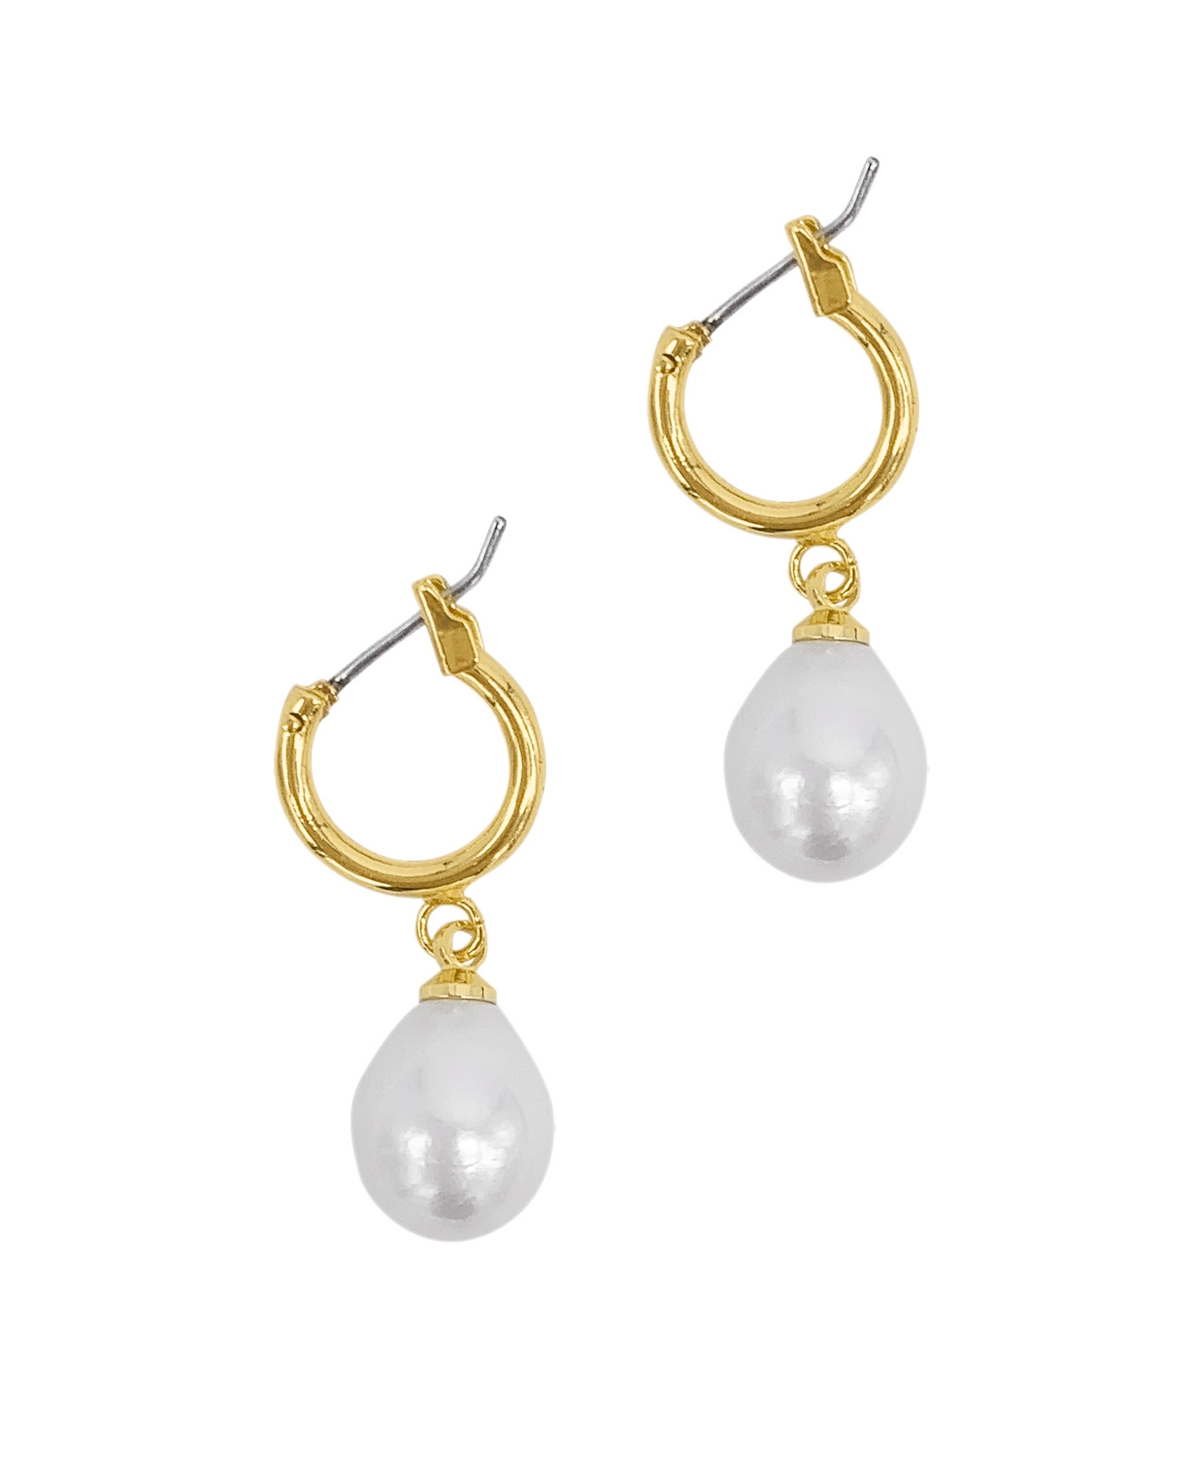 Freshwater Pearl Drop Earrings - Yellow Gold-Tone, White